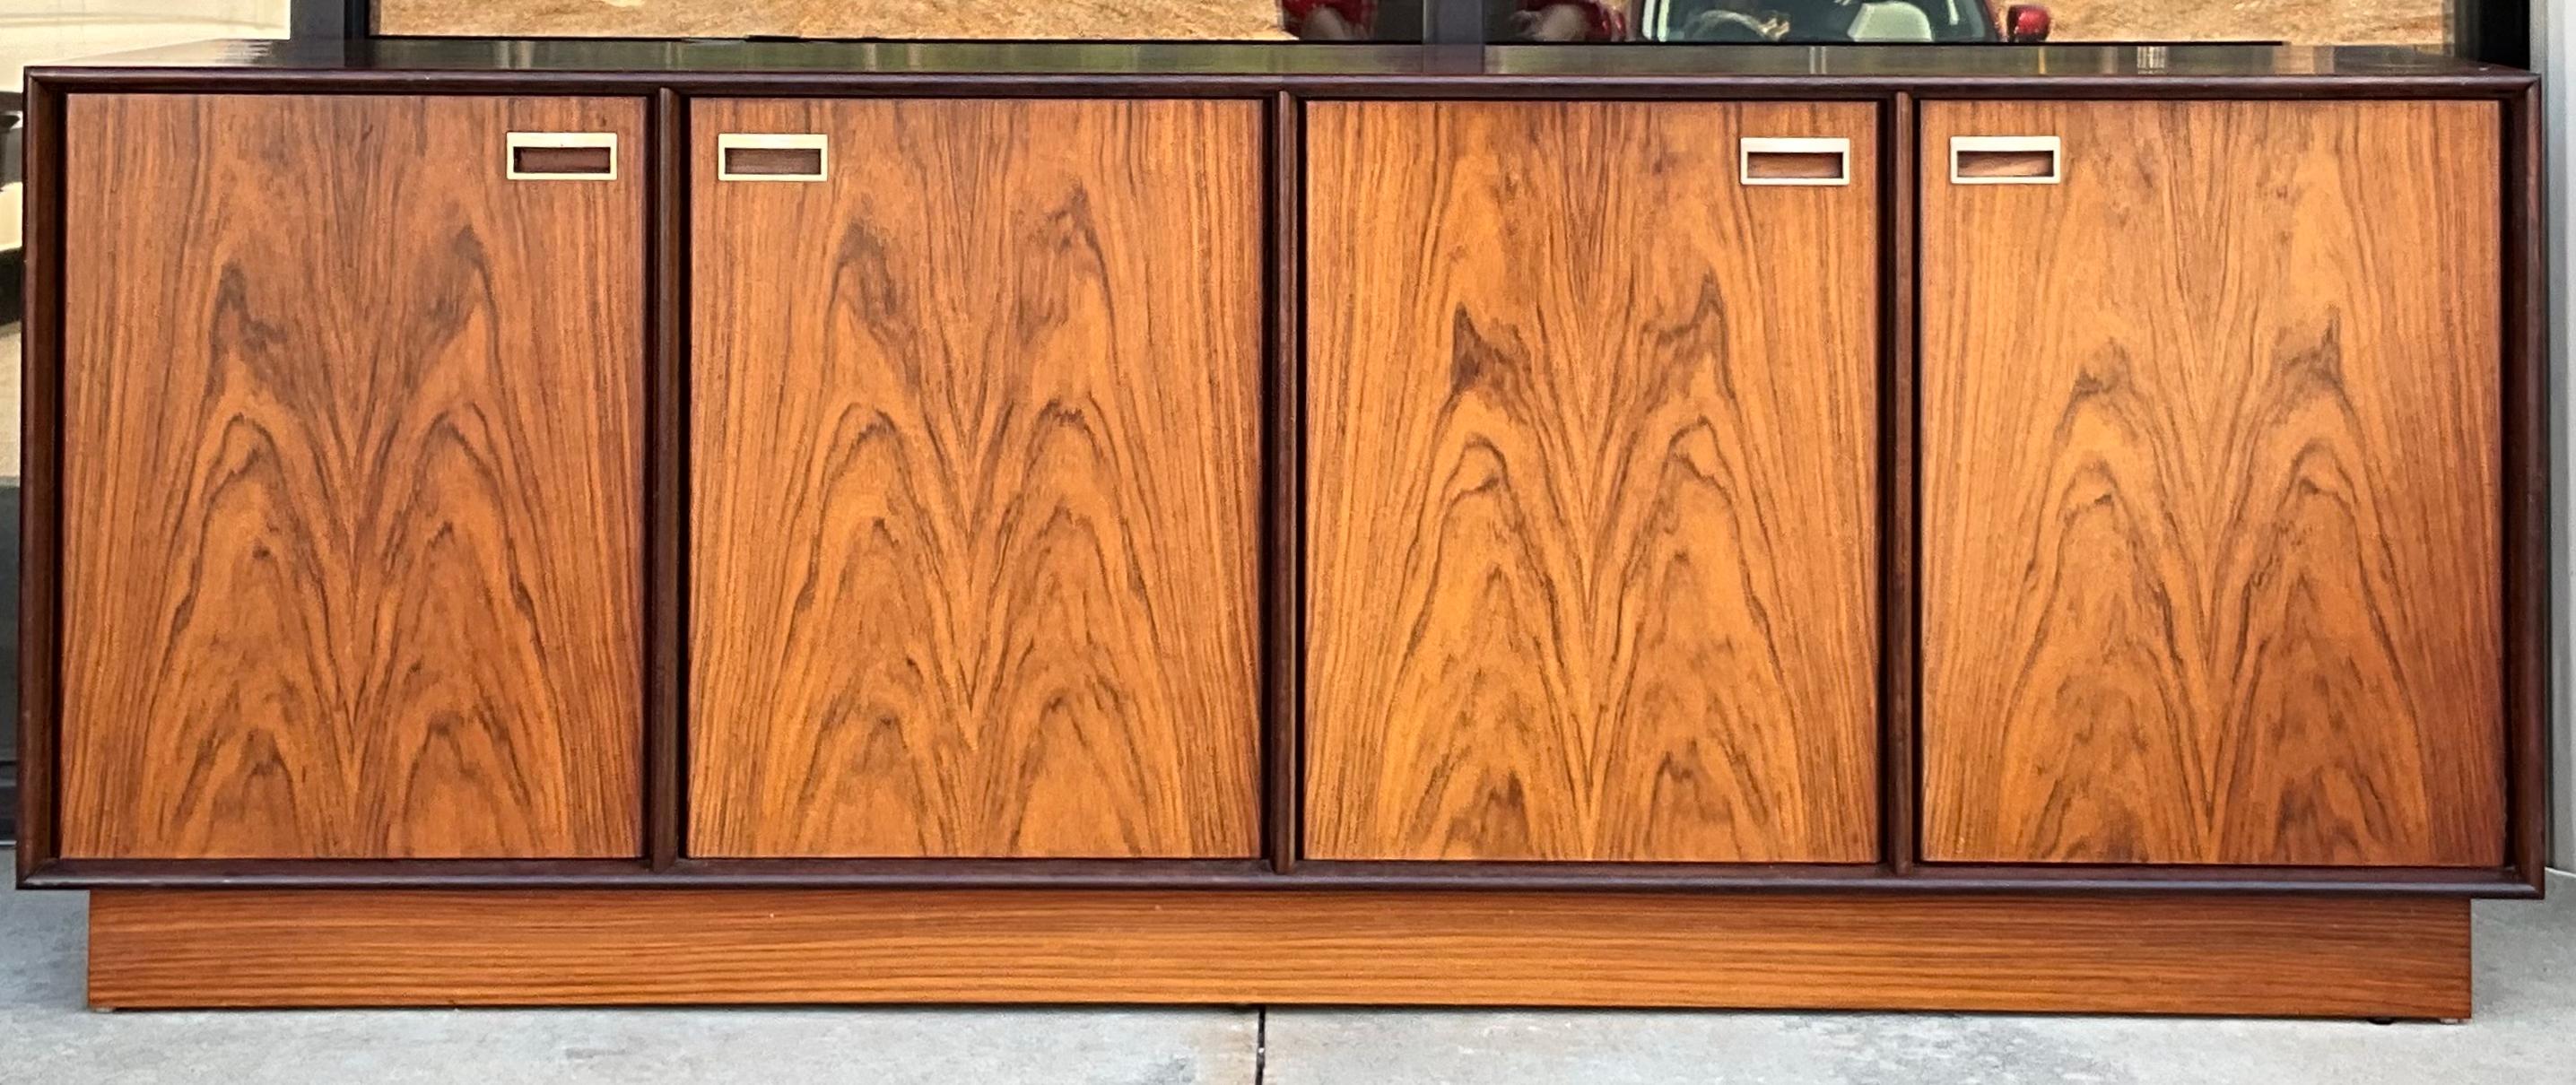 Midcentury Danish Modern Rosewood Veneer Credenza / Cabinet / Sideboard For Sale 1